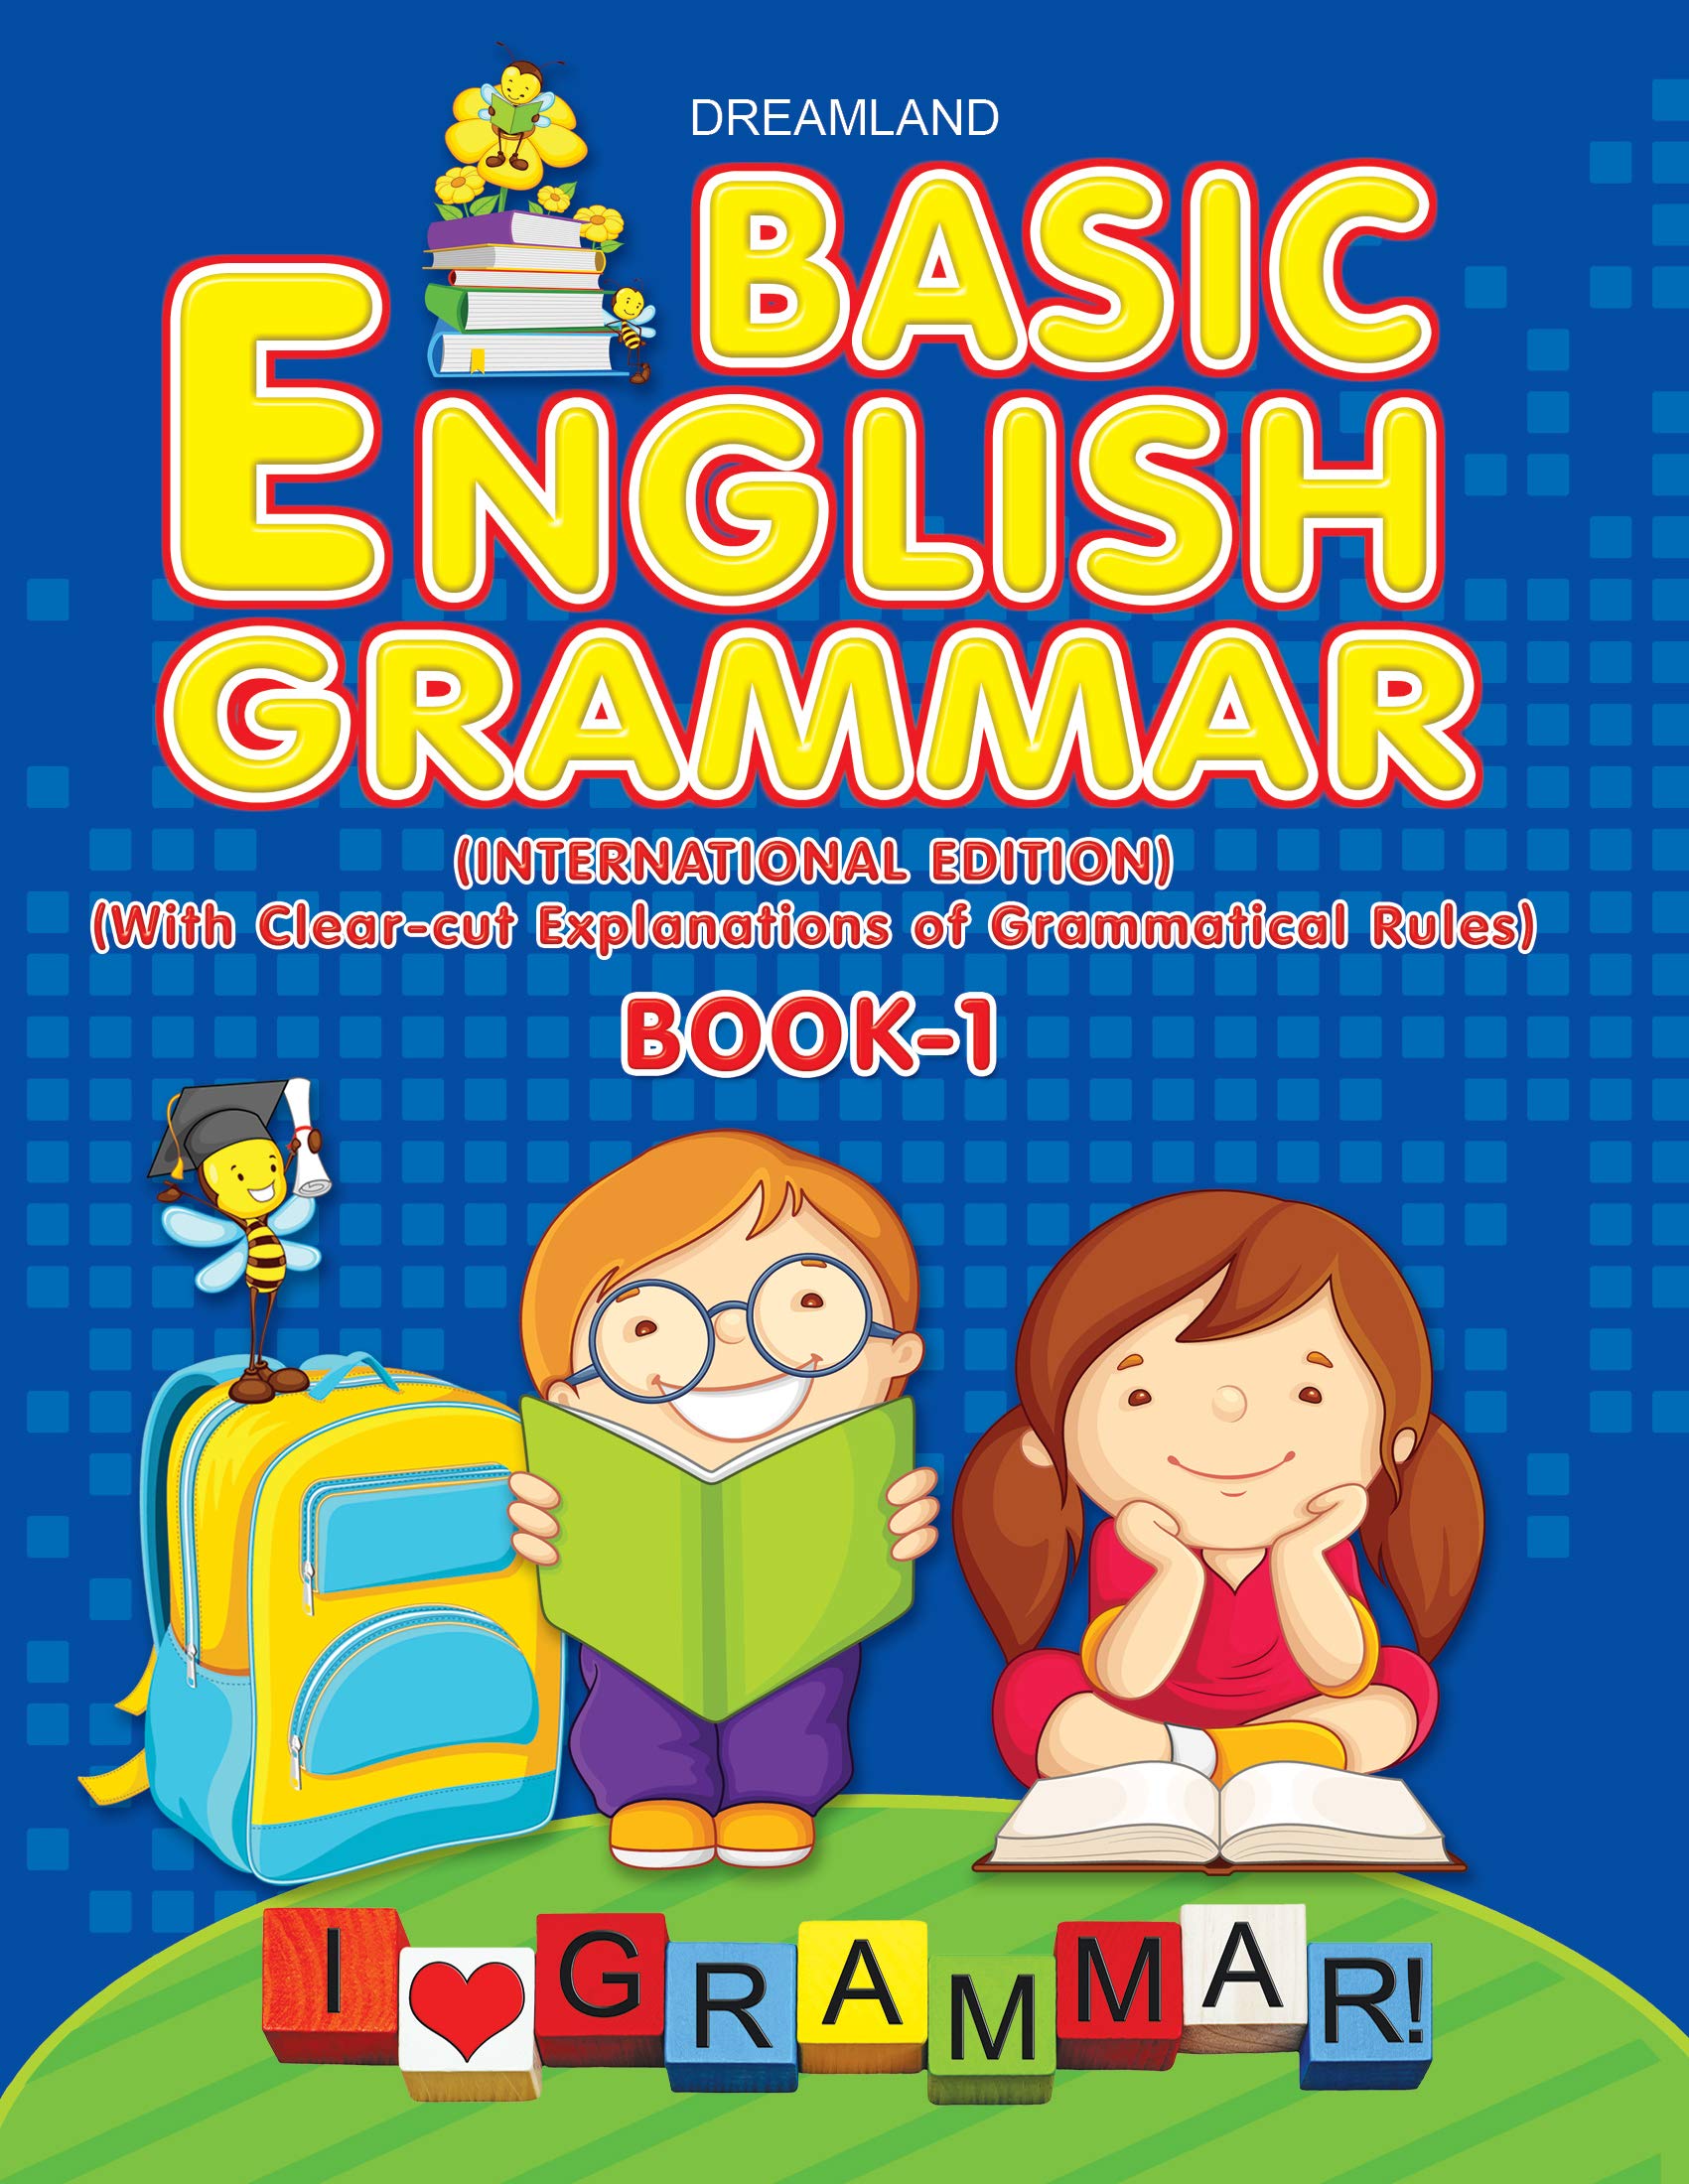 English　Stationers　Malik　Grammar　Part　Basic　Dreamland　Booksellers